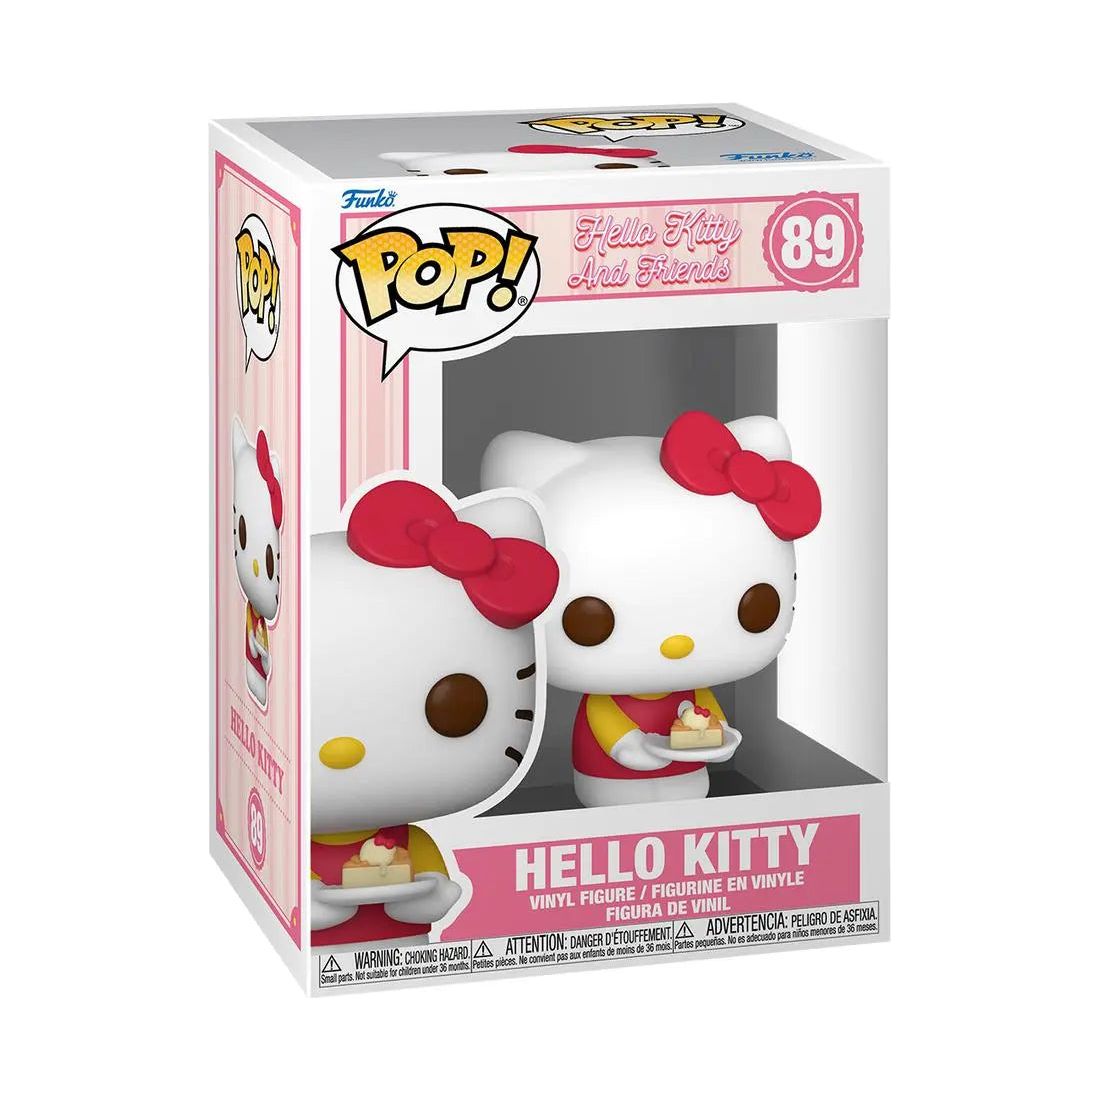 Funko Pop! Hello Kitty And Friends 89 Hello Kitty with Dessert Funko